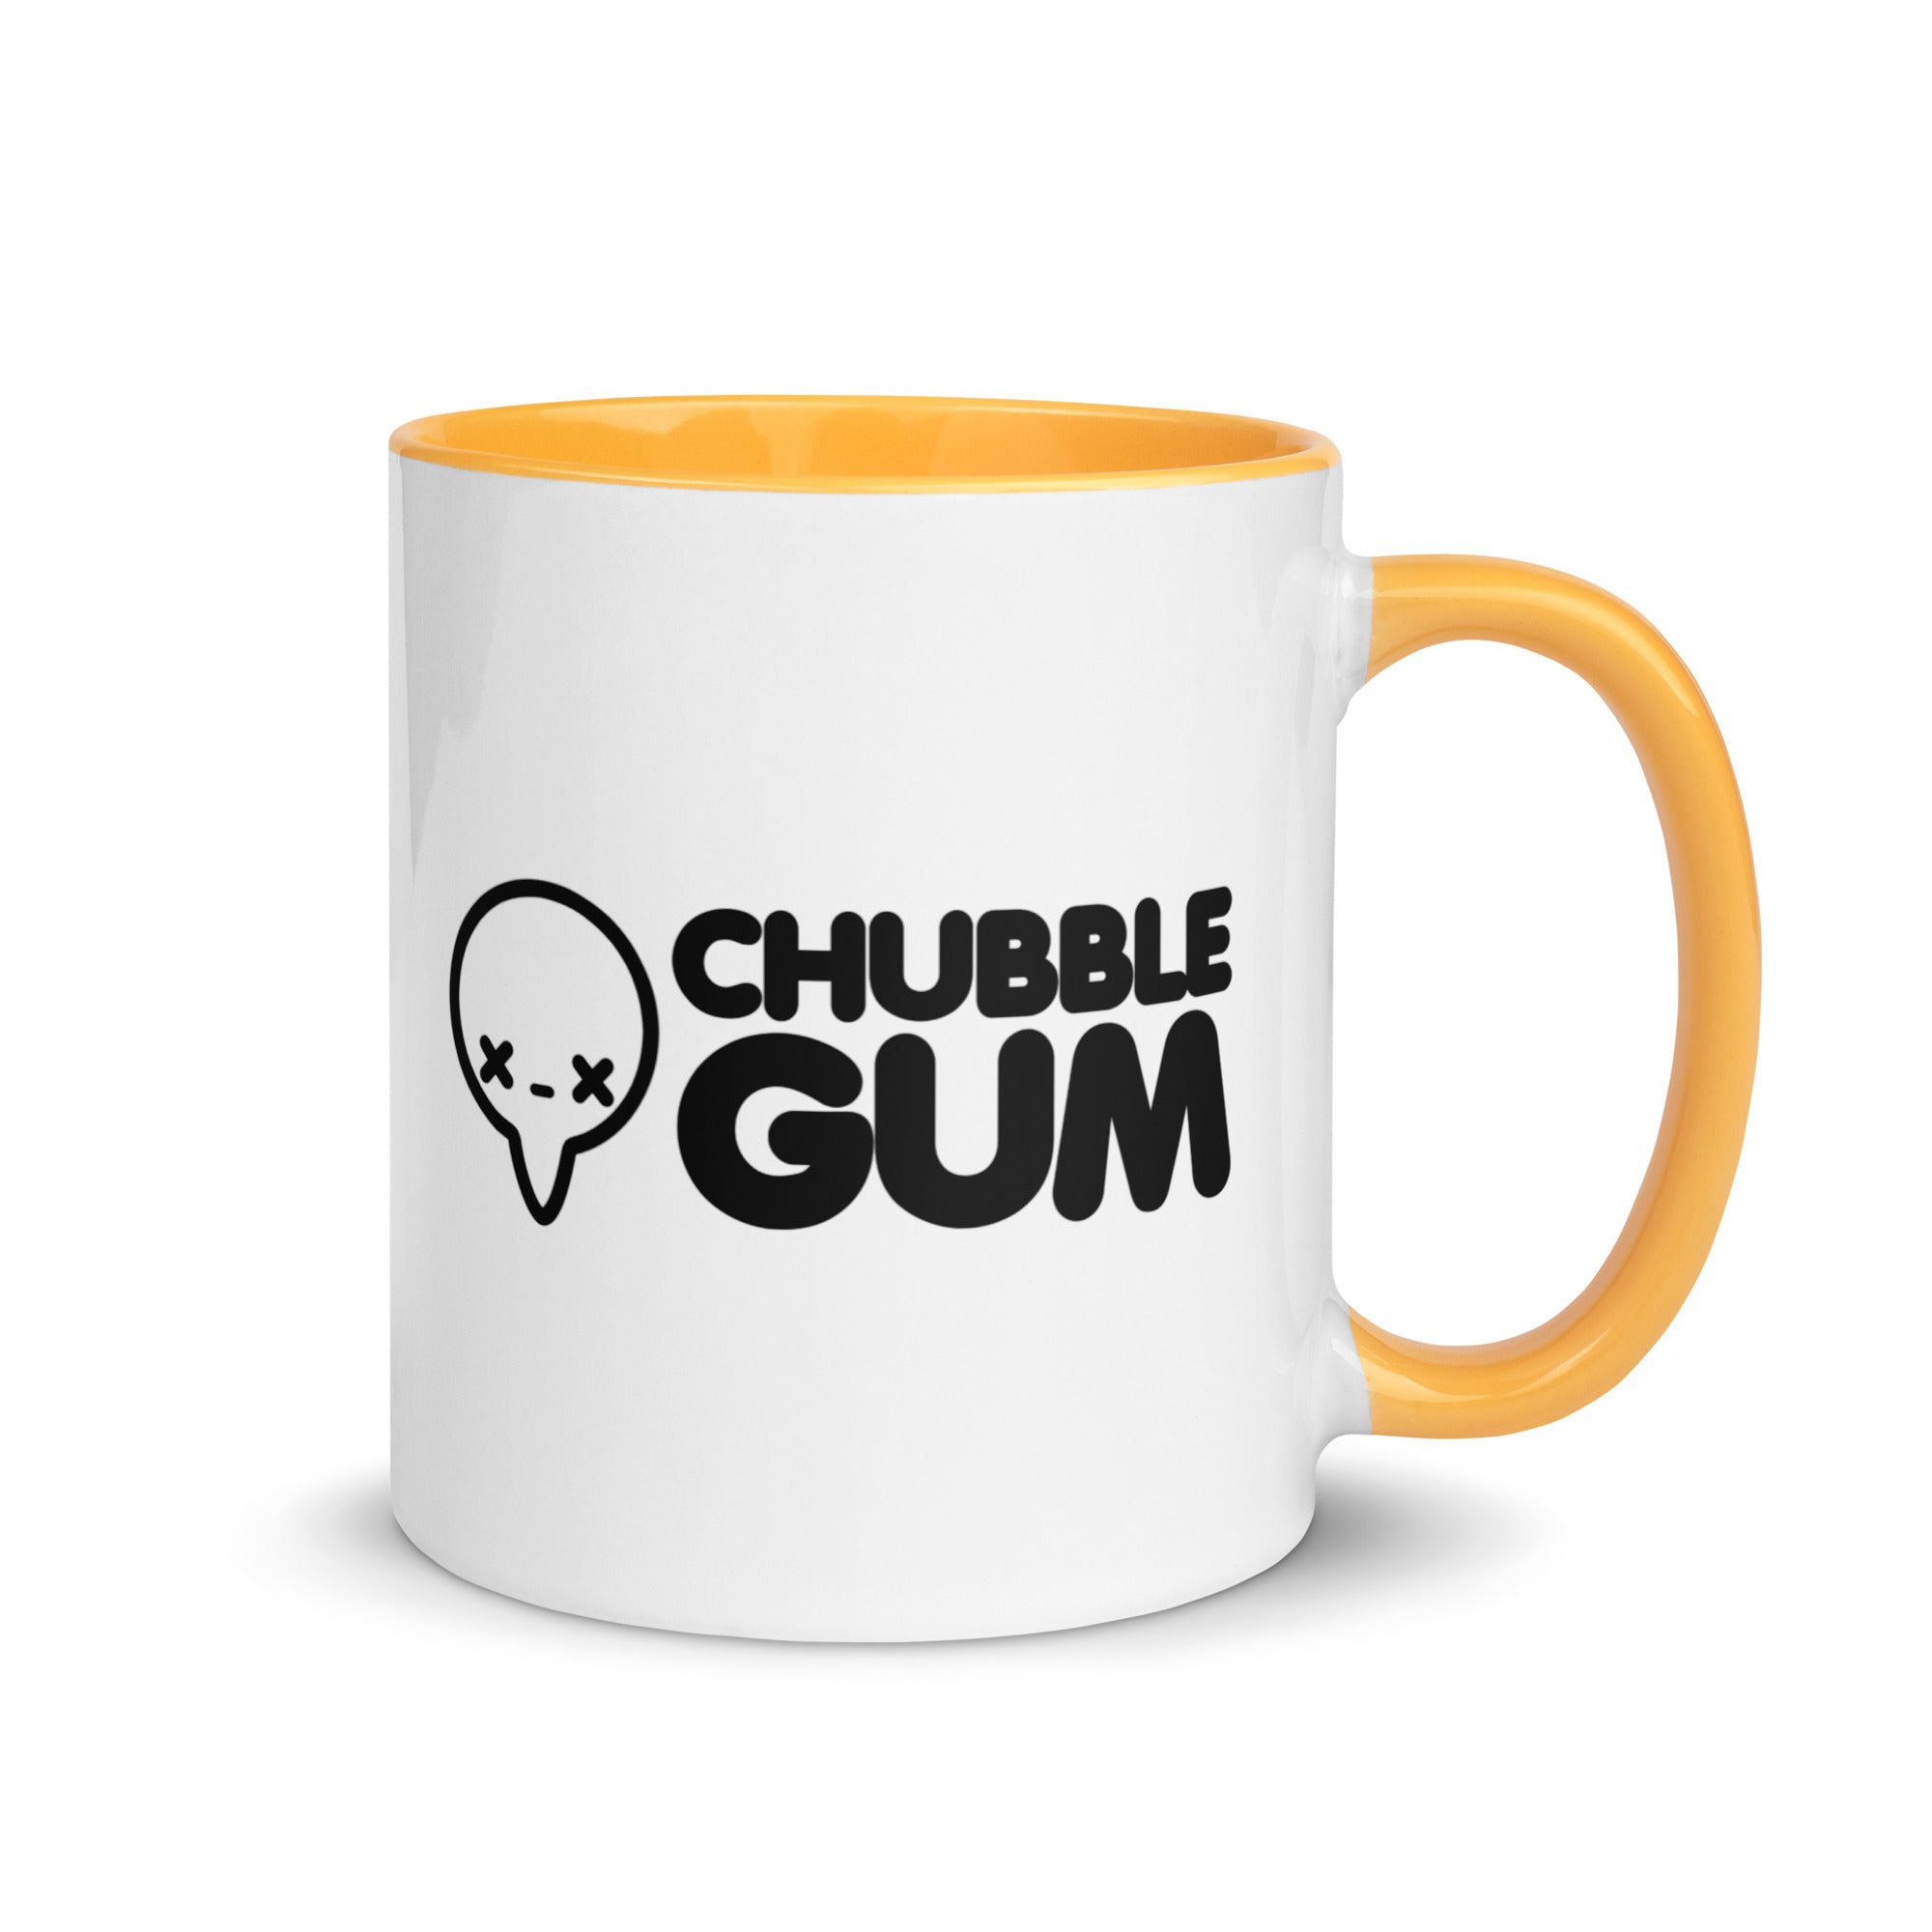 THIS IS MY HUMAN COSTUME - Mug with Color Inside - ChubbleGumLLC